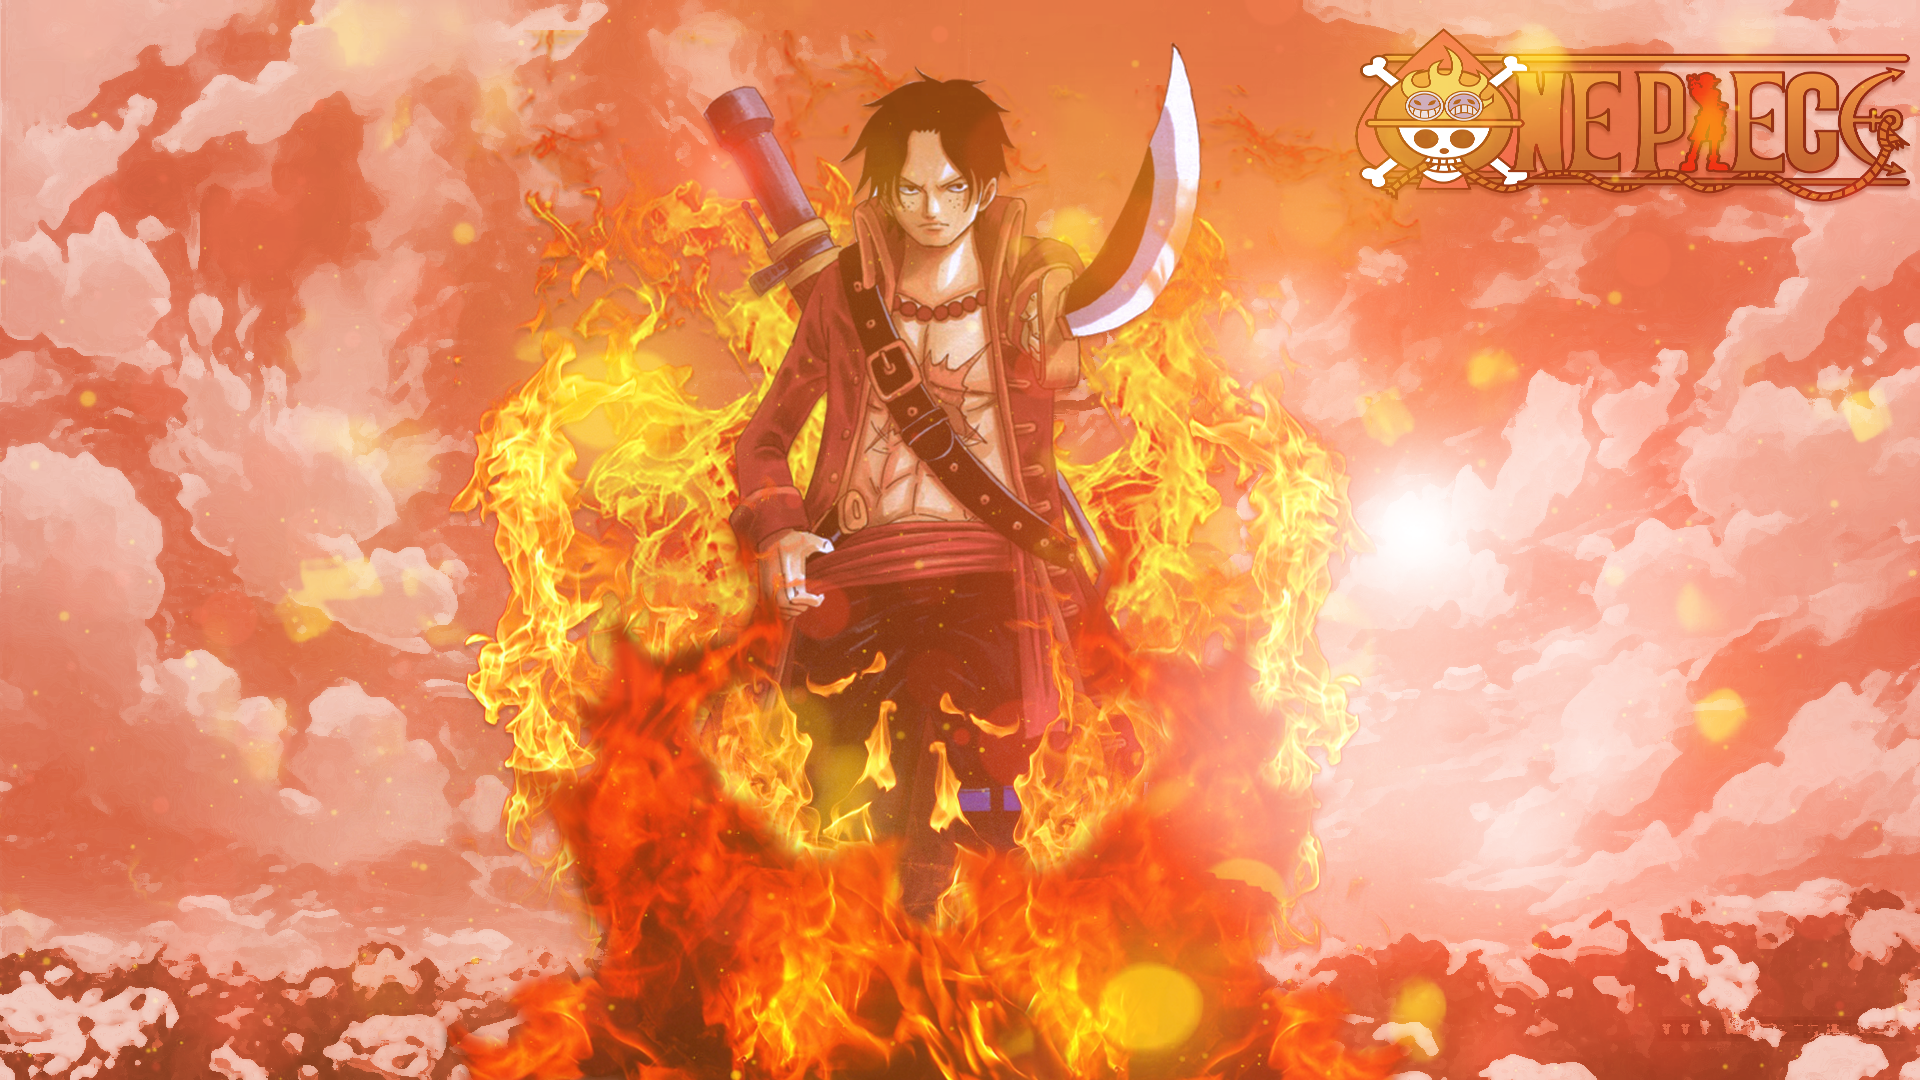 Desktop Wallpaper One Piece Anime Boy Hd Image Picture Background 3ixaff